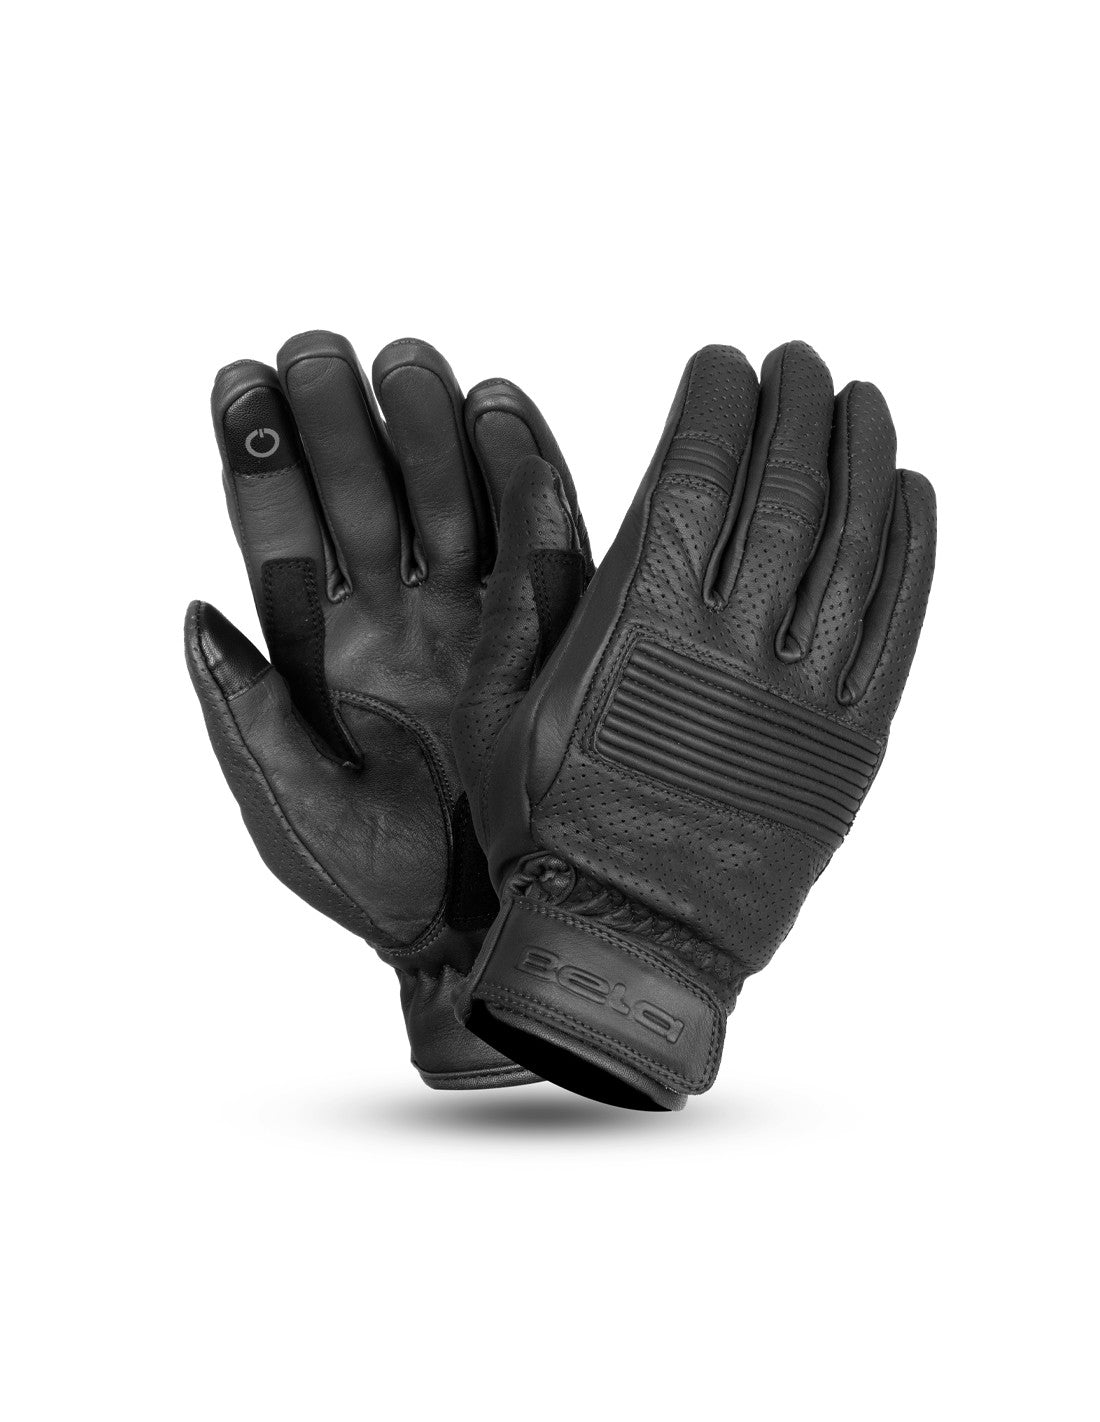 BELA Streeter guanti estivi in pelle da uomo - Nero